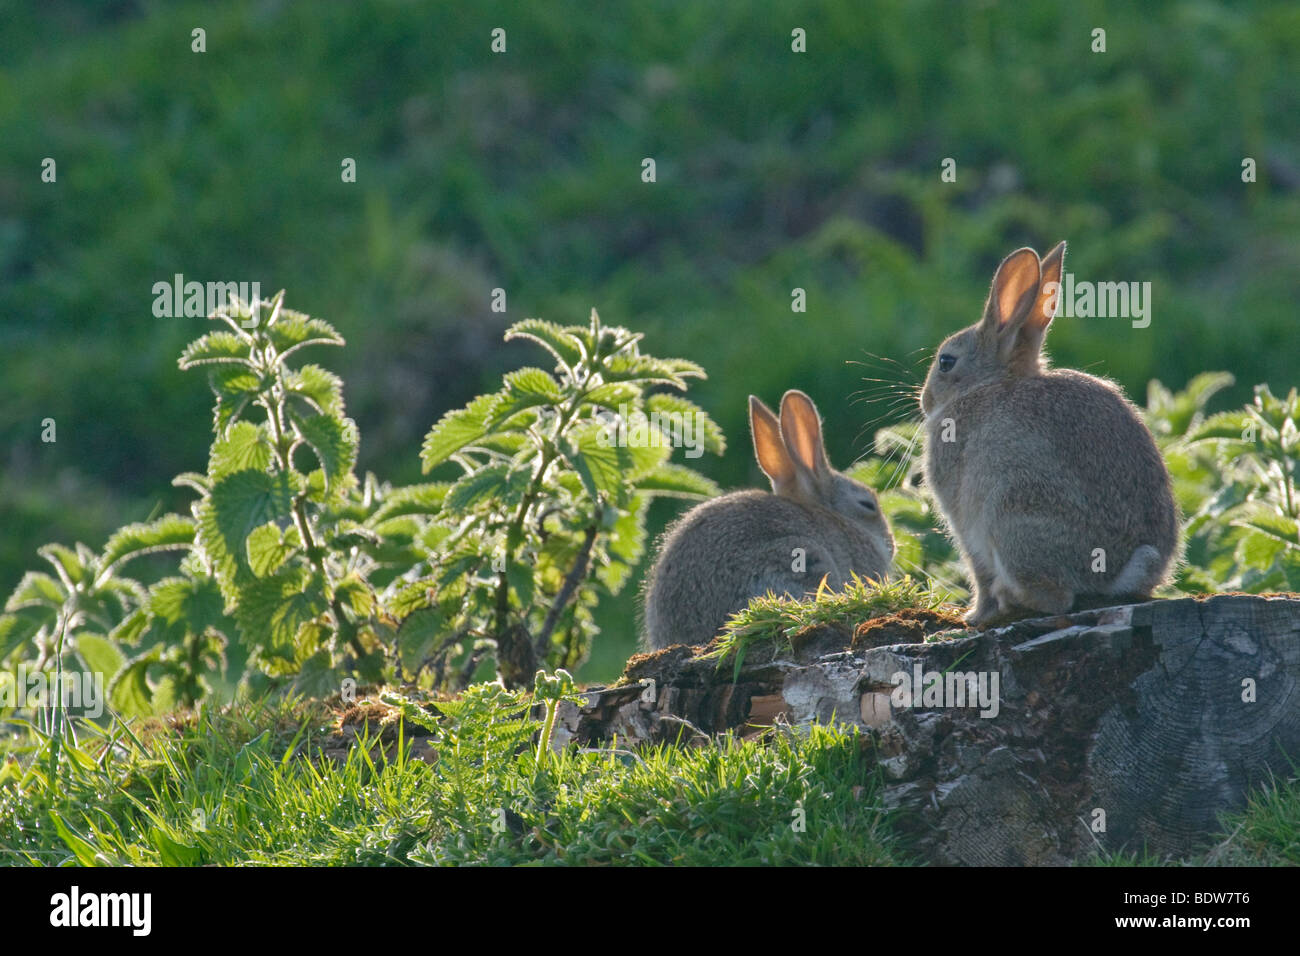 Baby rabbits Oryctolagus cuniculus basking in sunshine. Scotland. Stock Photo